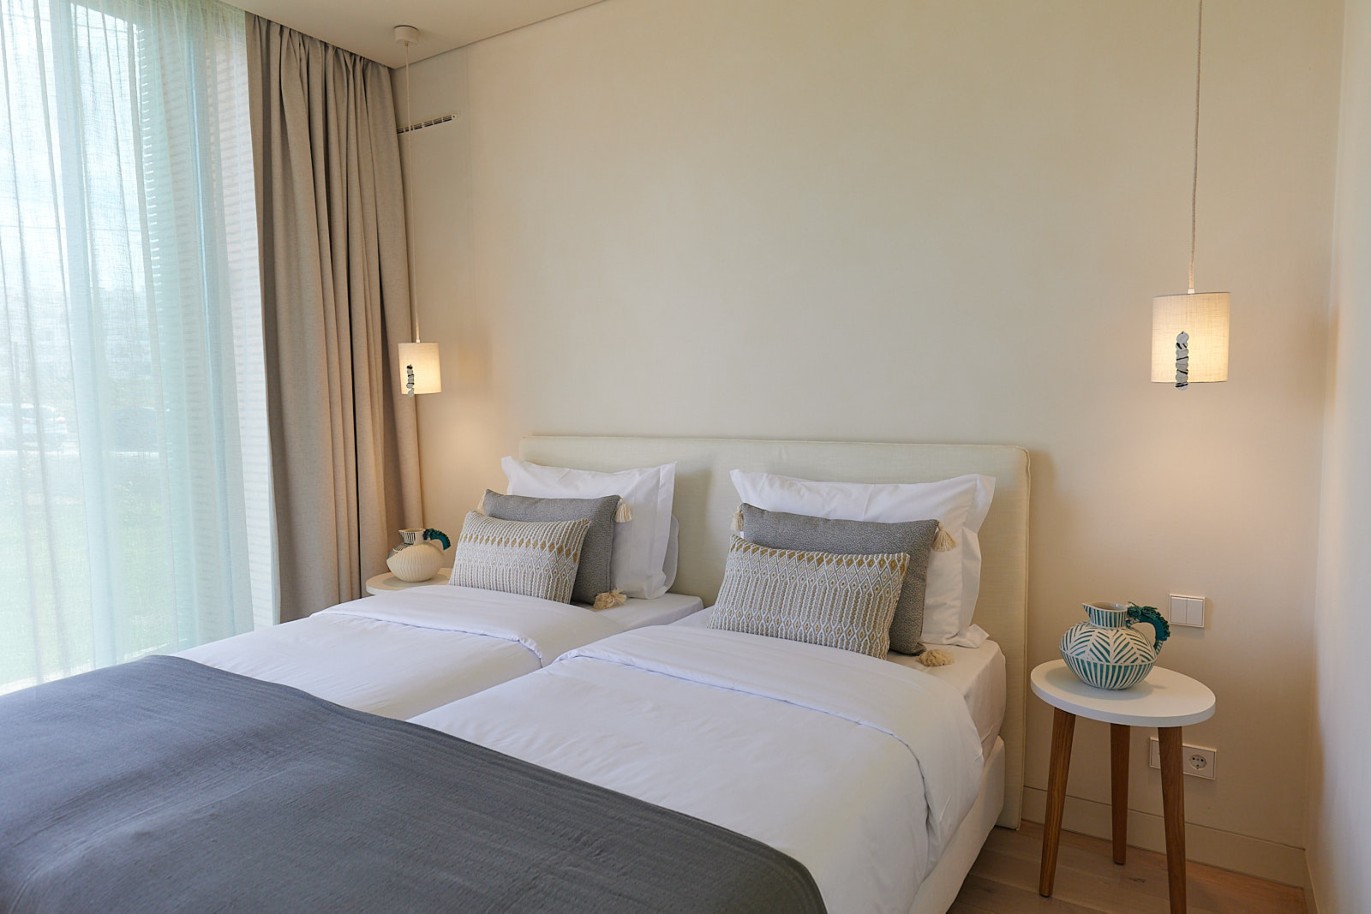 2 bedroom apartment in resort, for sale in Porches, Algarve_229211